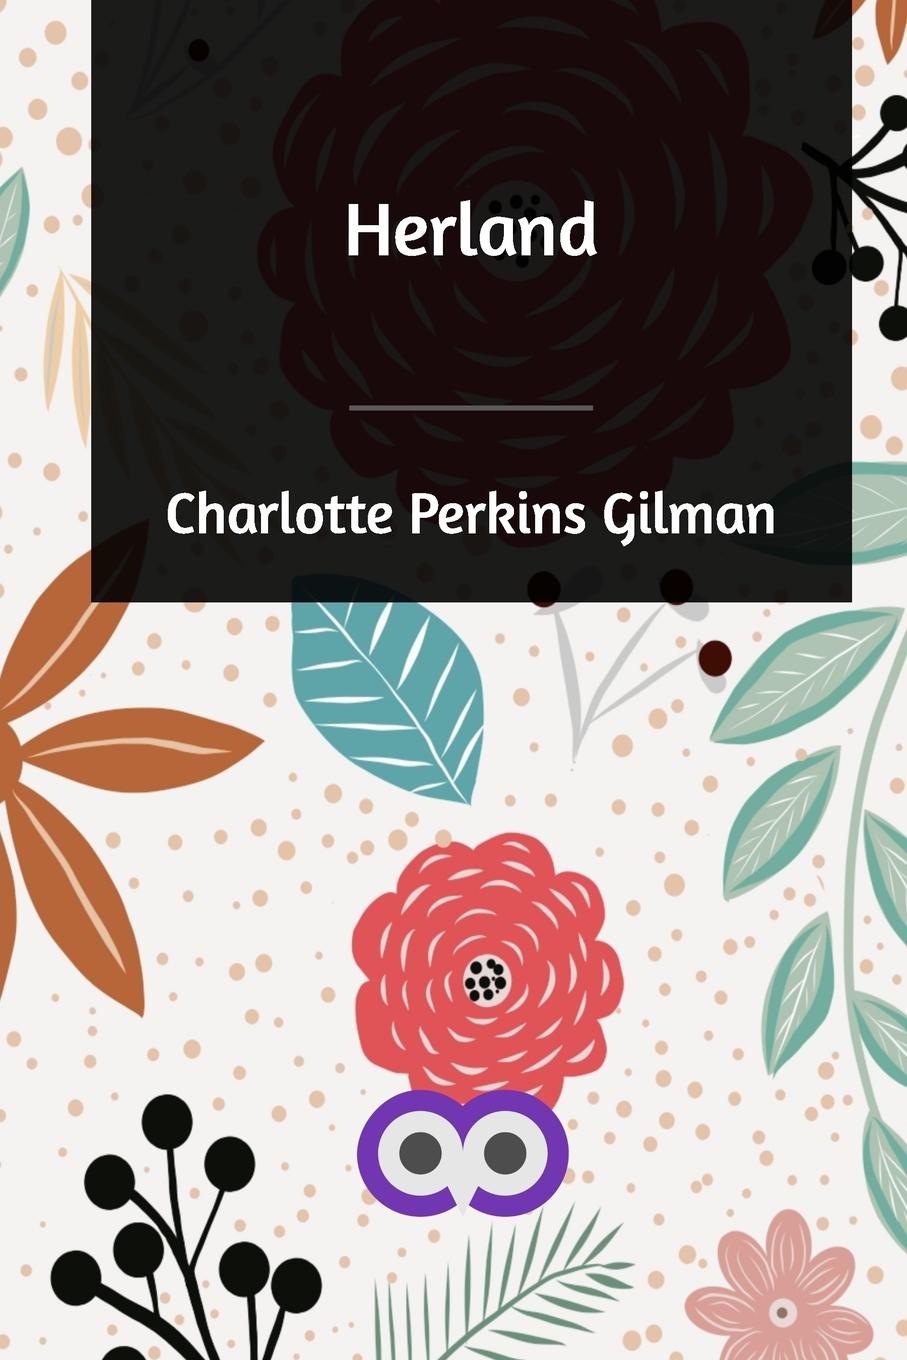 Herland - Gilman, Charlotte Perkins